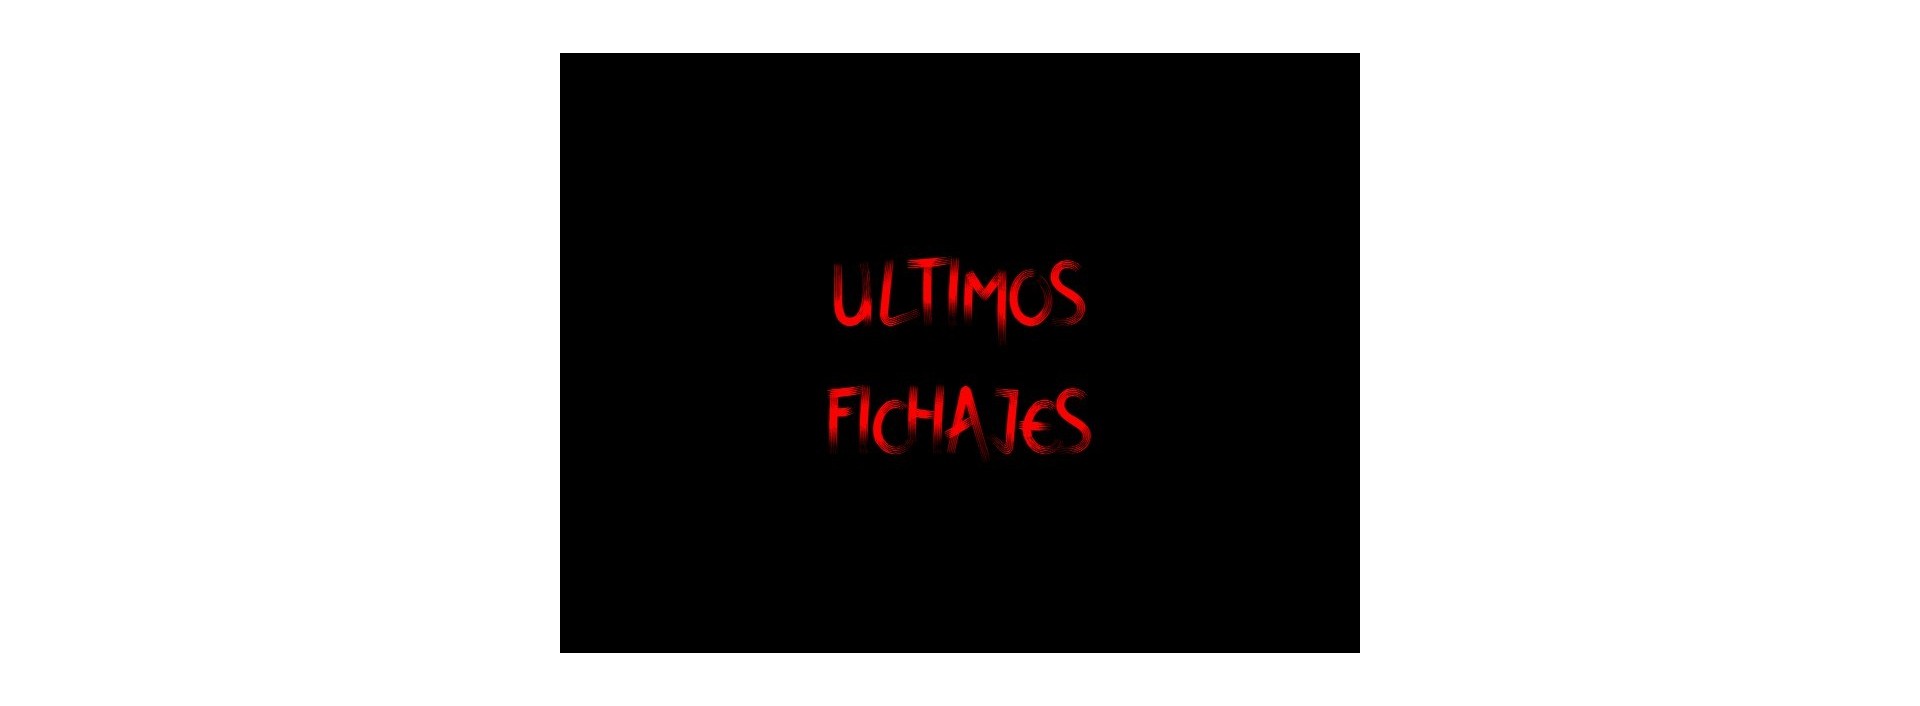 ULTIMOS FICHAJES